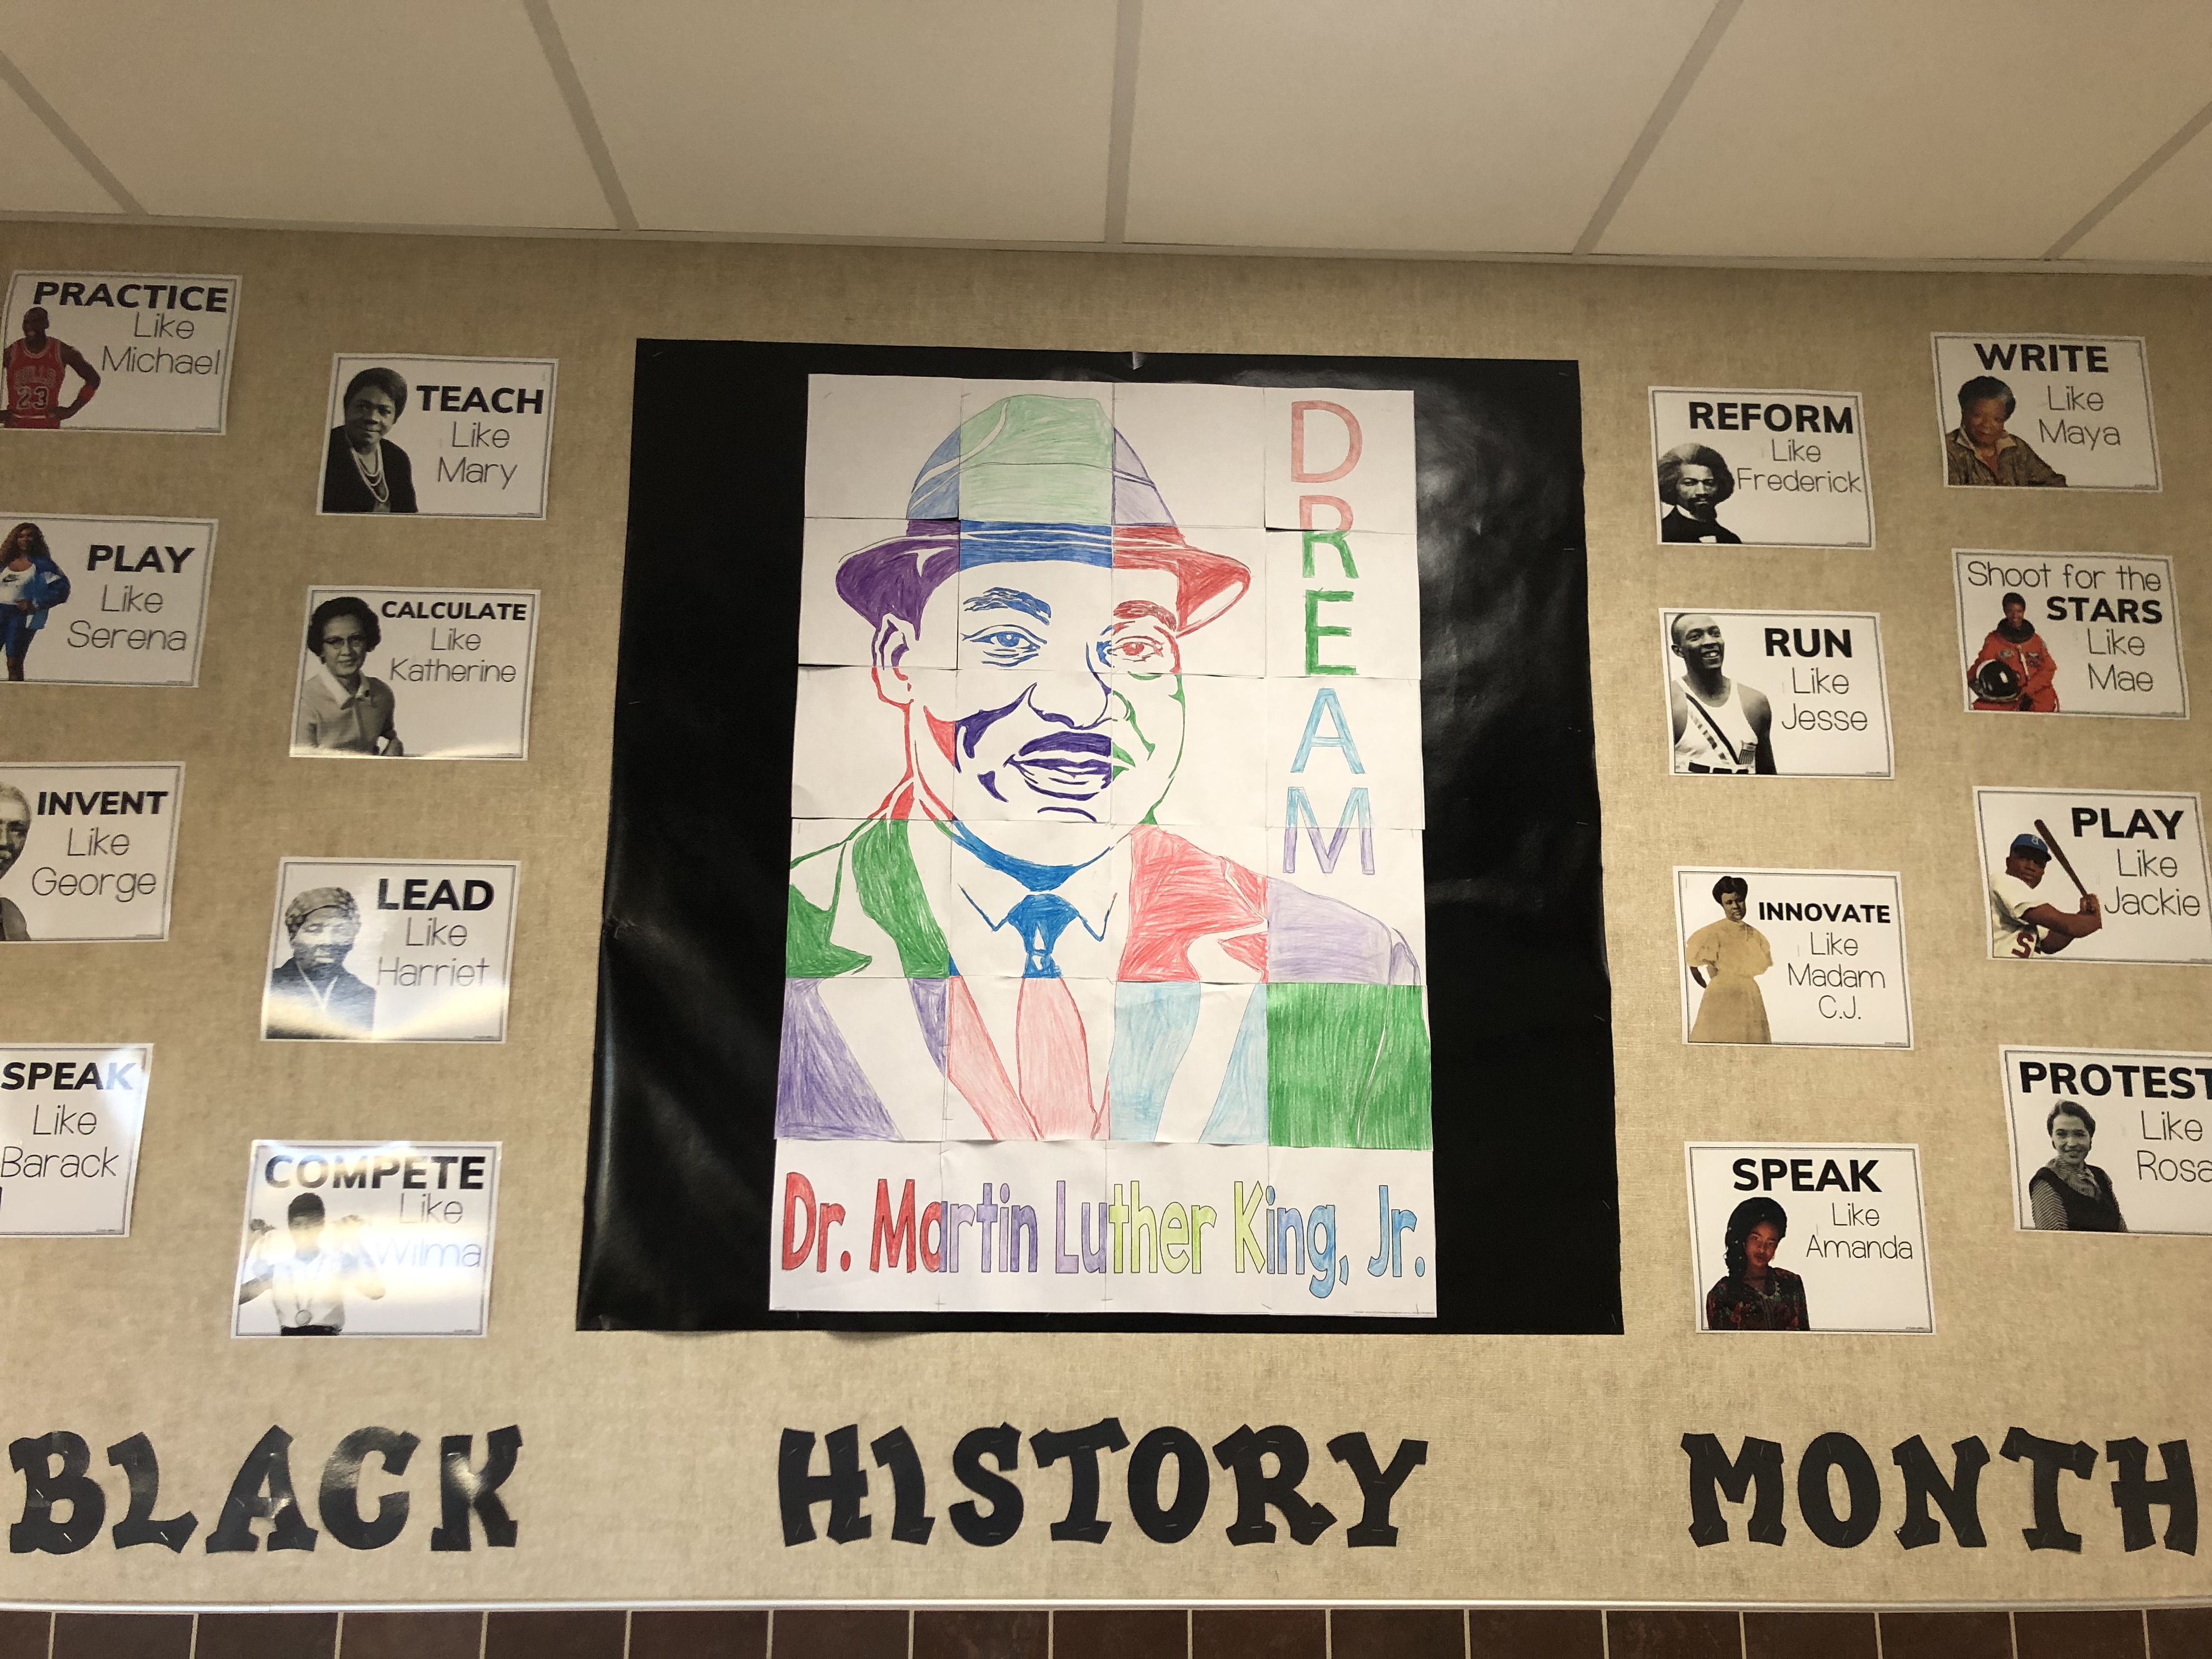 Black History Month billboard with MLK Jr. on it